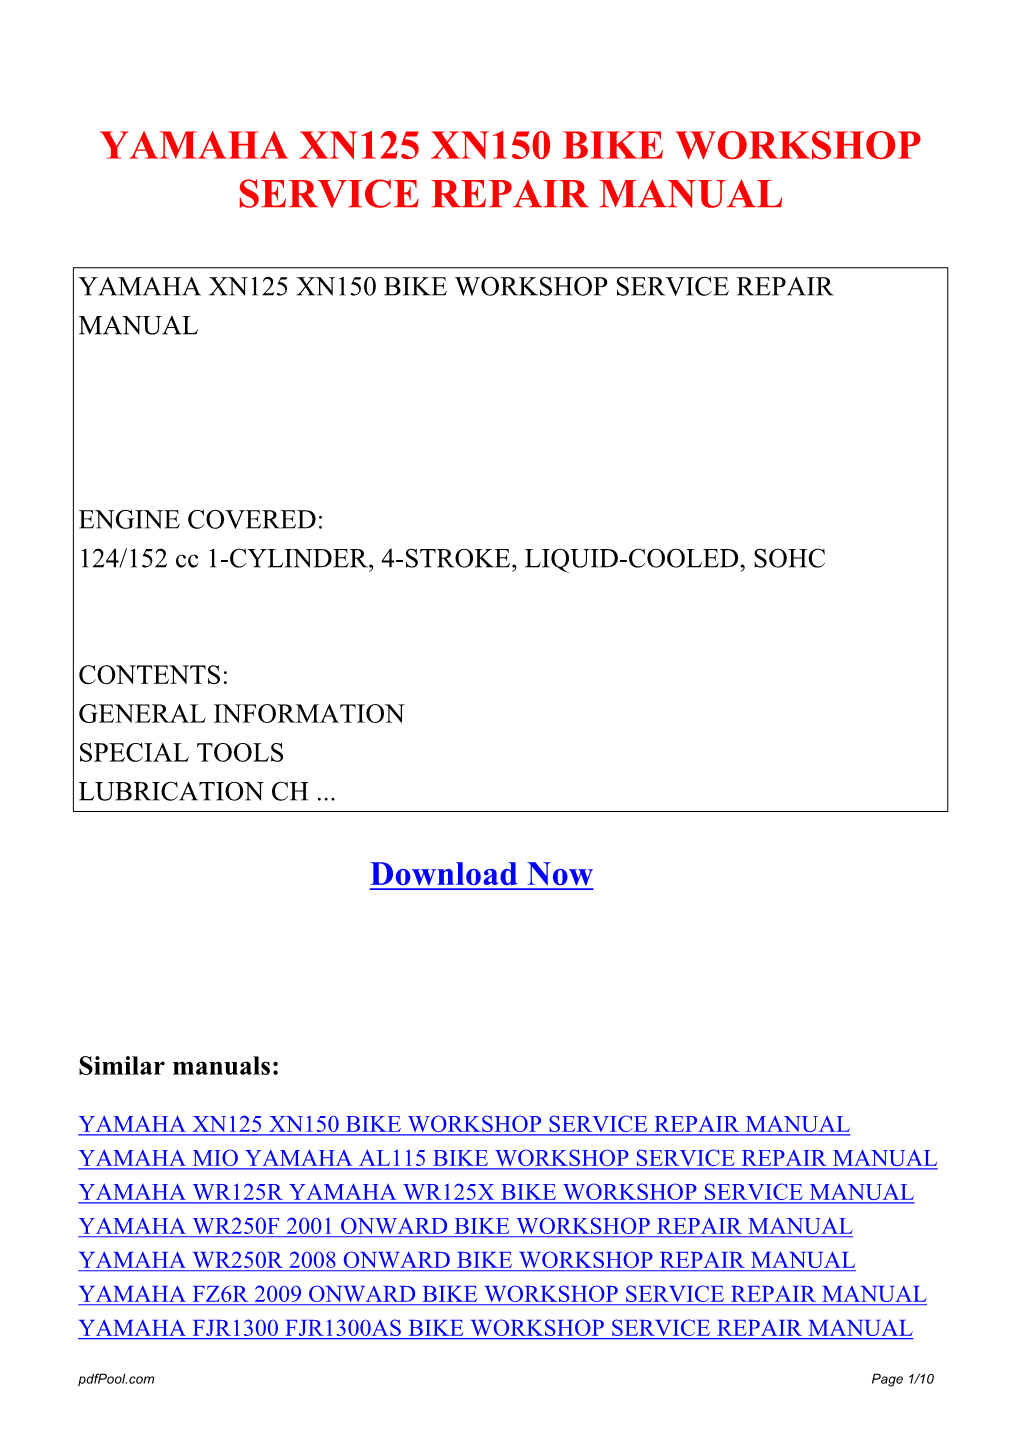 Yamaha Xn125 Xn150 Bike Workshop Service Repair Manual